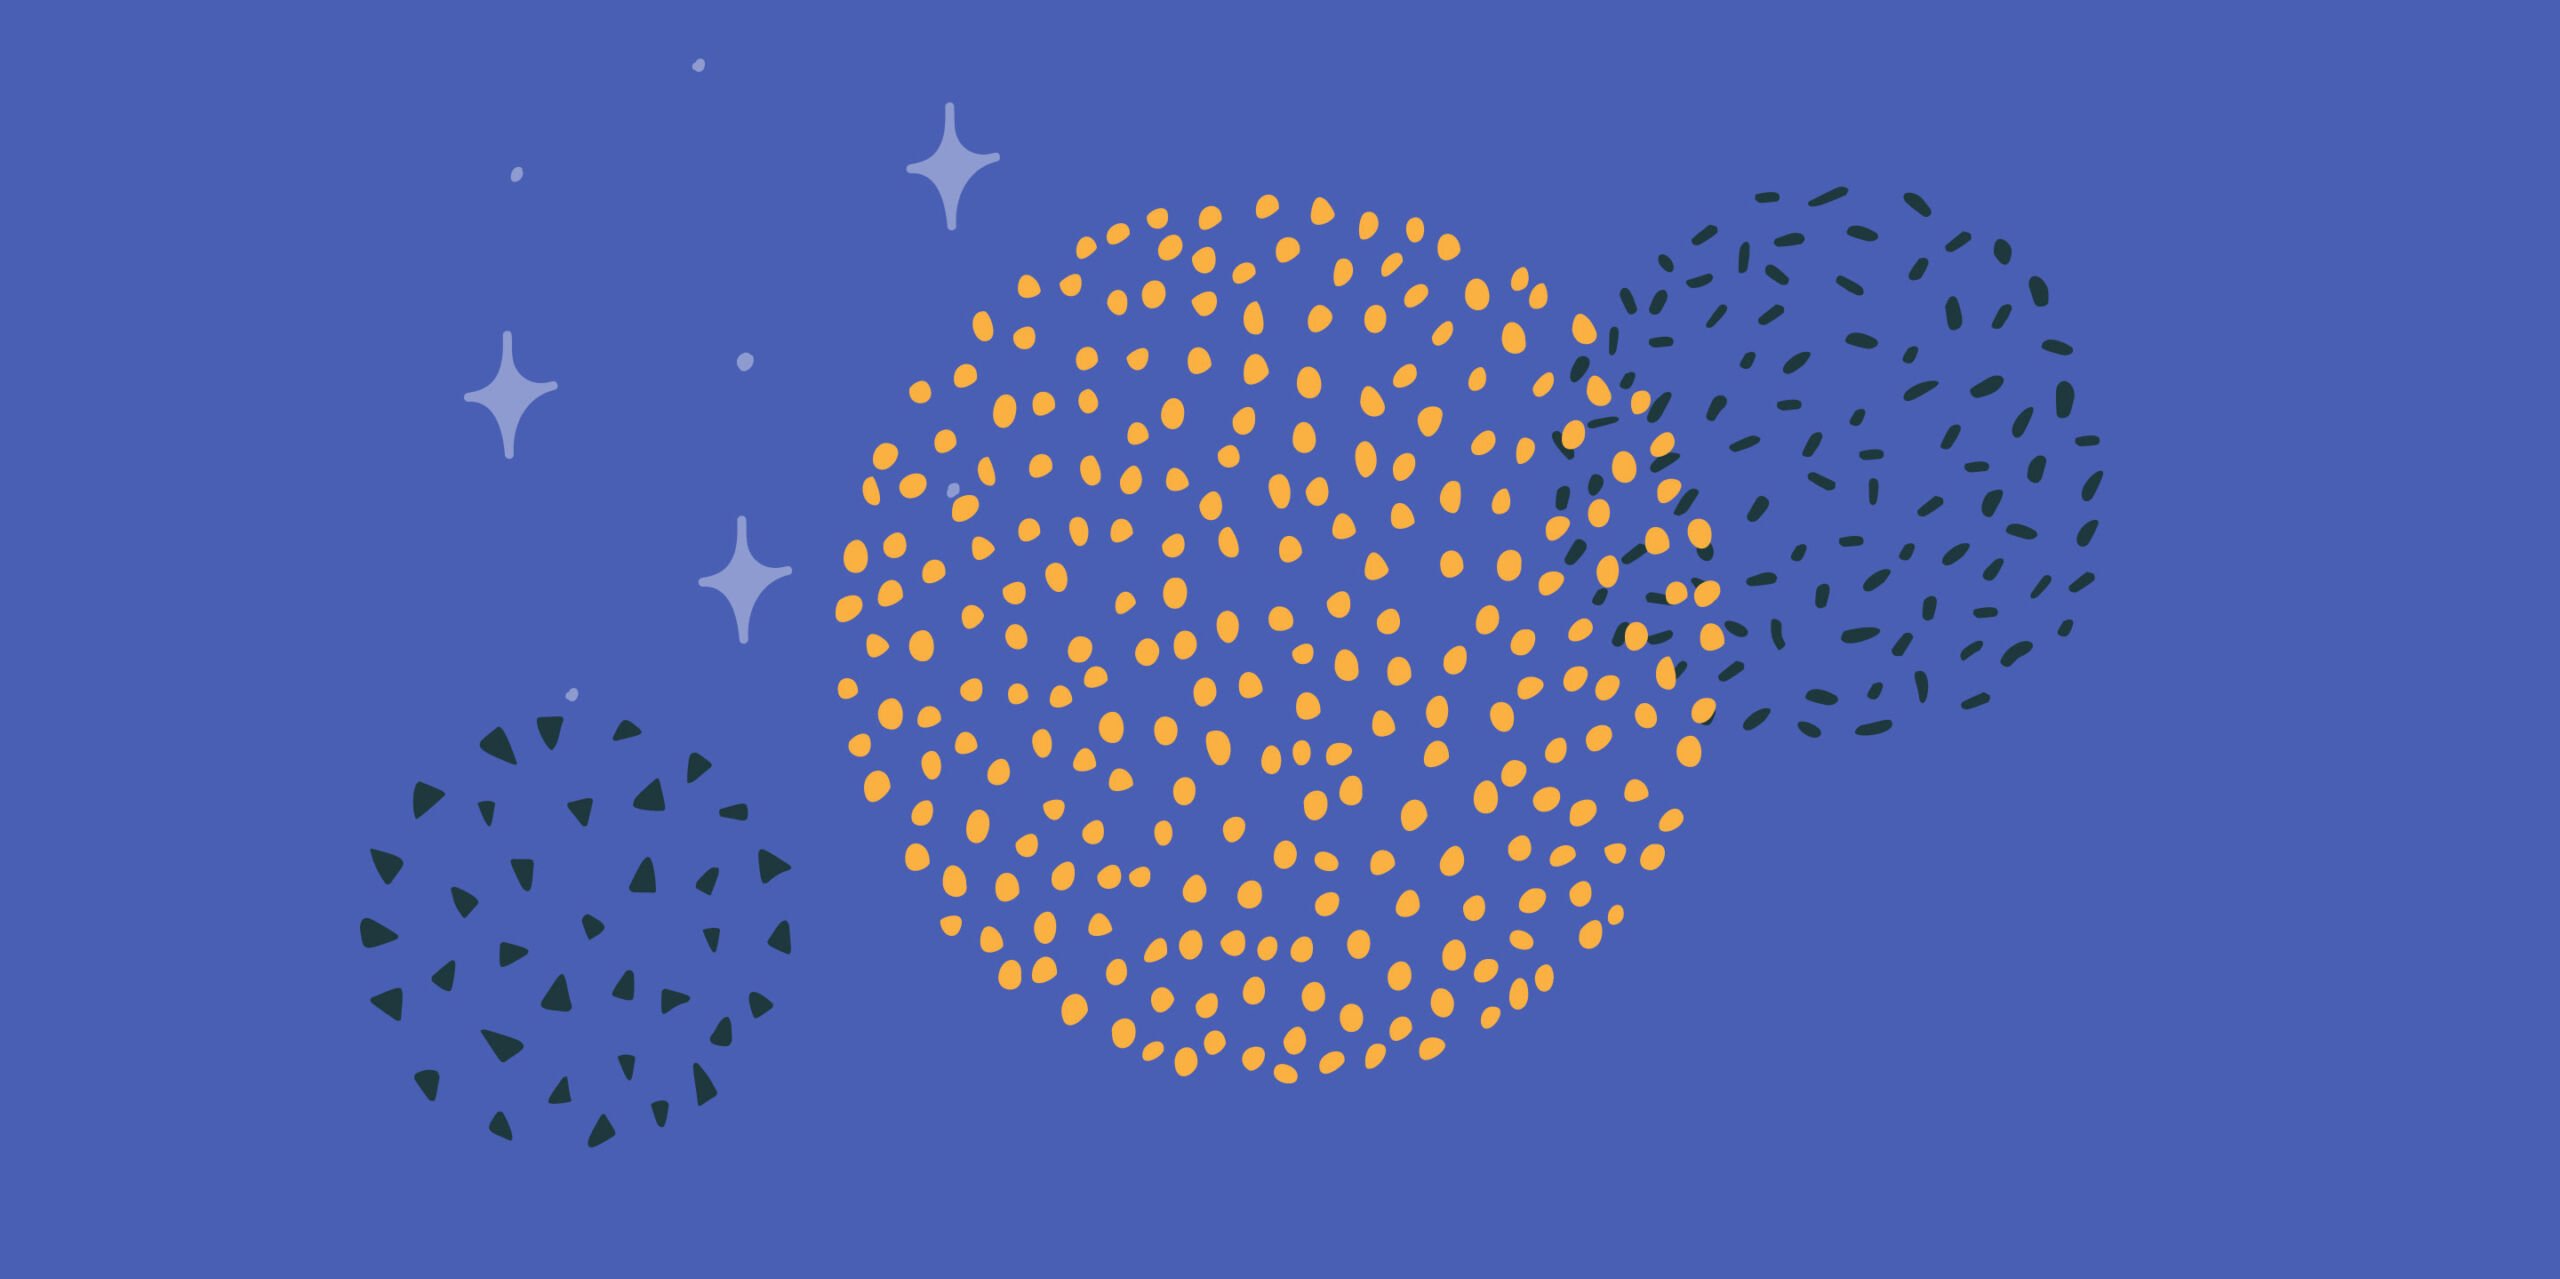 Abstract illustration of celebratory starbursts